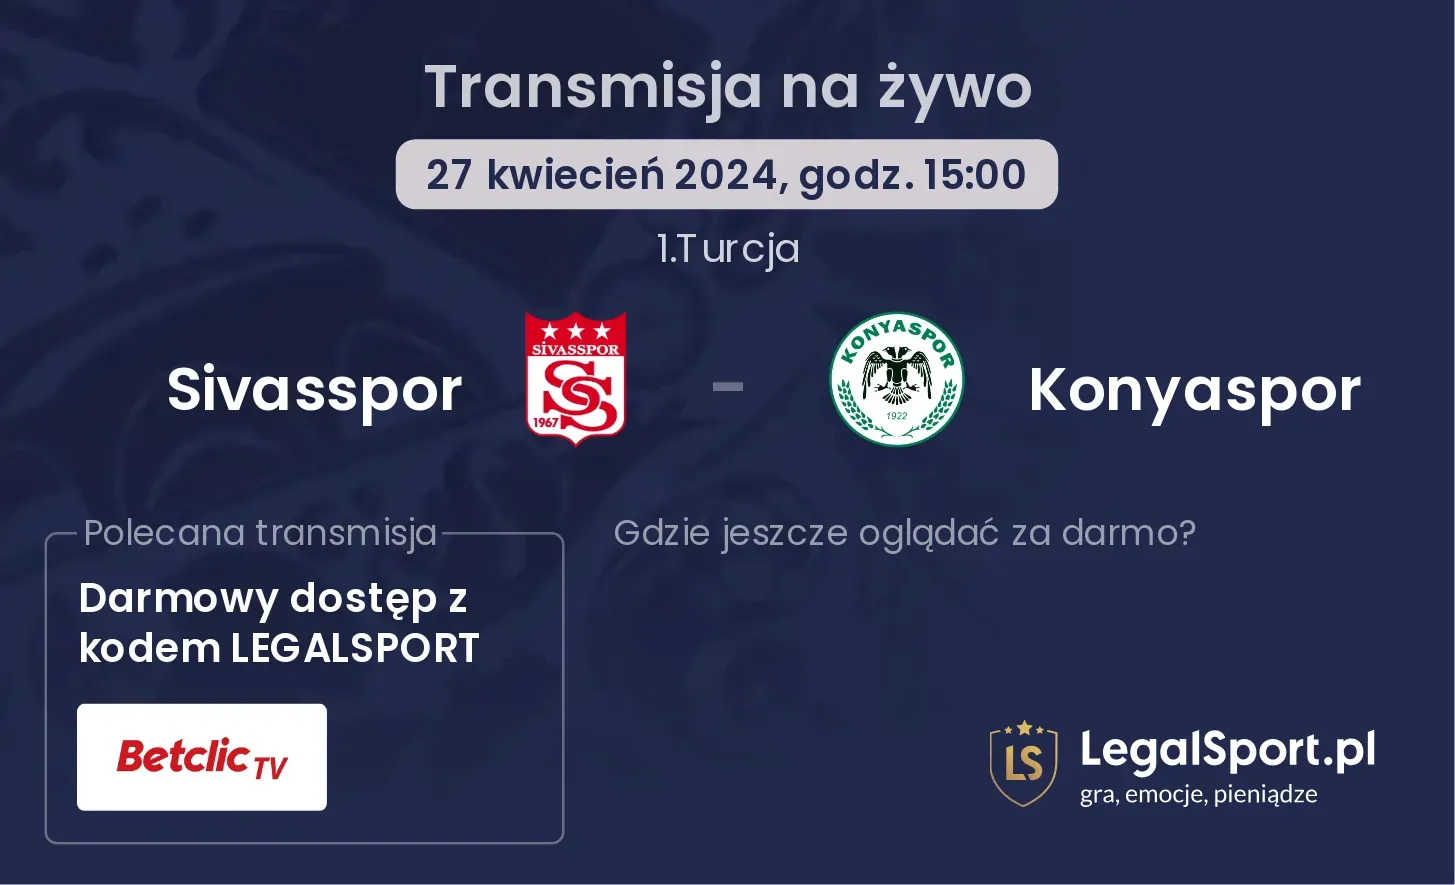 Sivasspor - Konyaspor transmisja na żywo